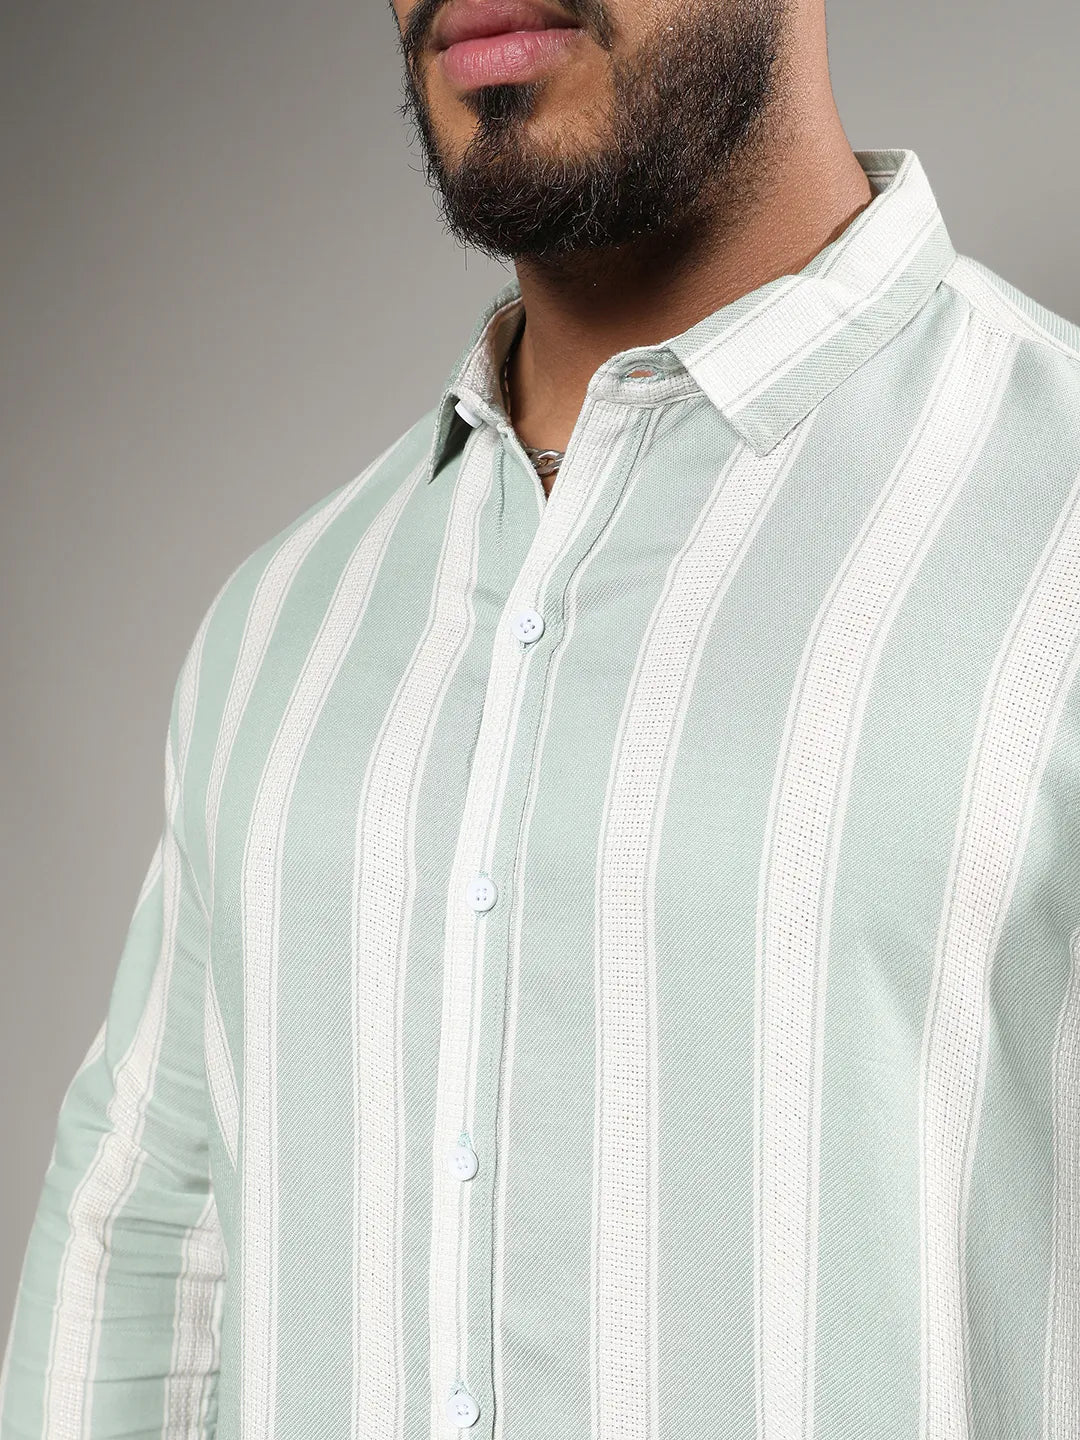 Sage Green & White Contrast Club Striped Shirt